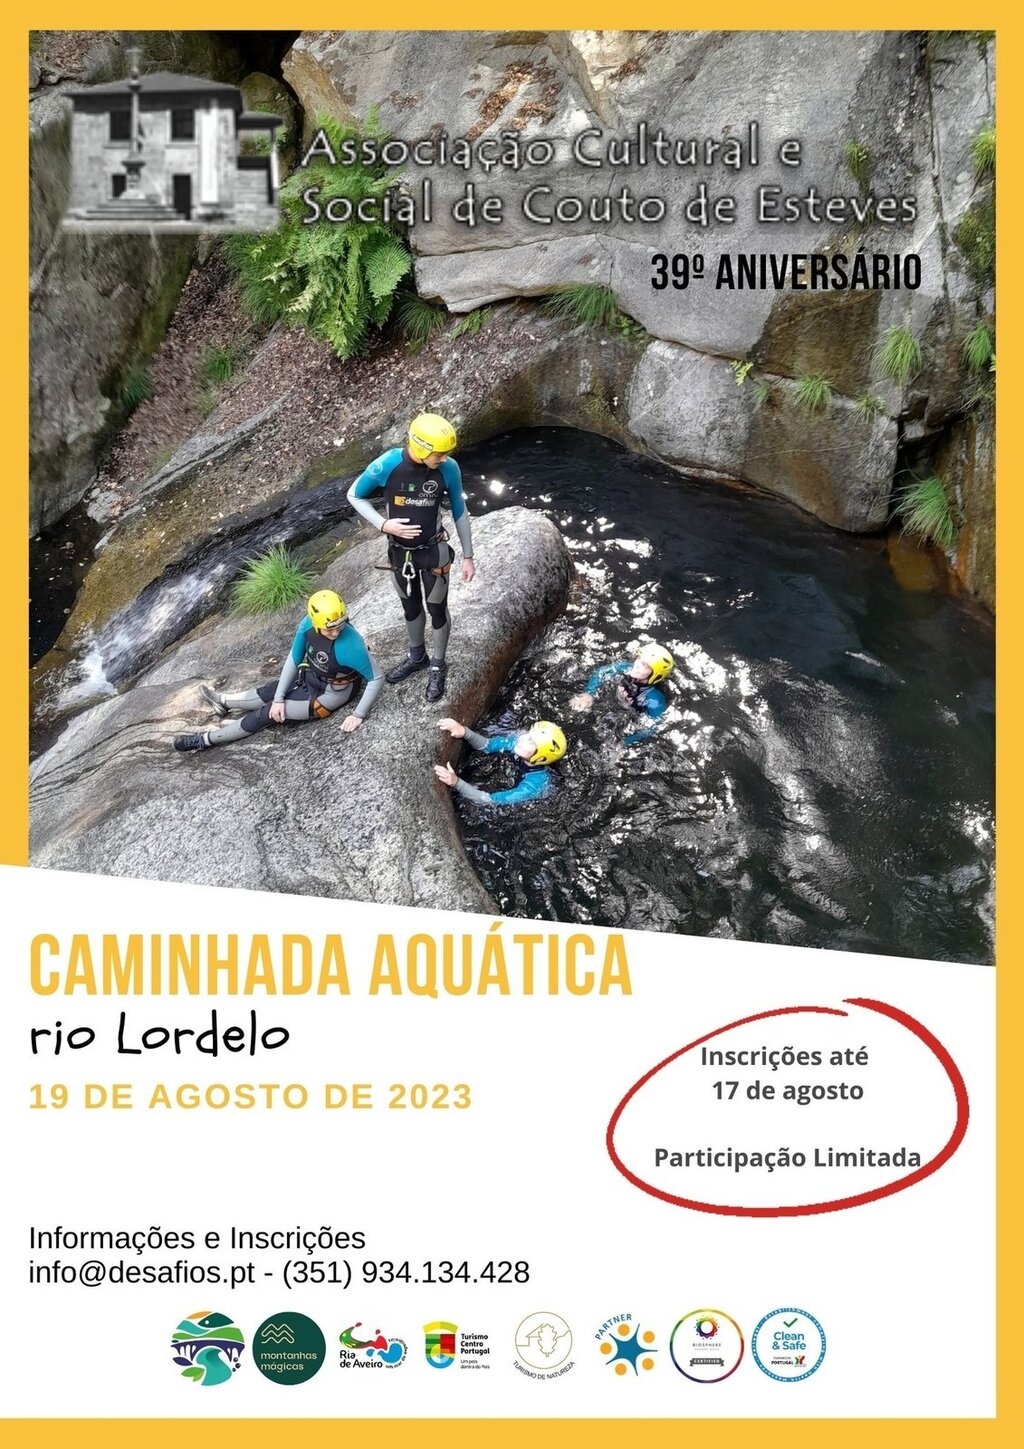 19 agosto - Caminhada Aquática - Rio Lordelo - Desafios